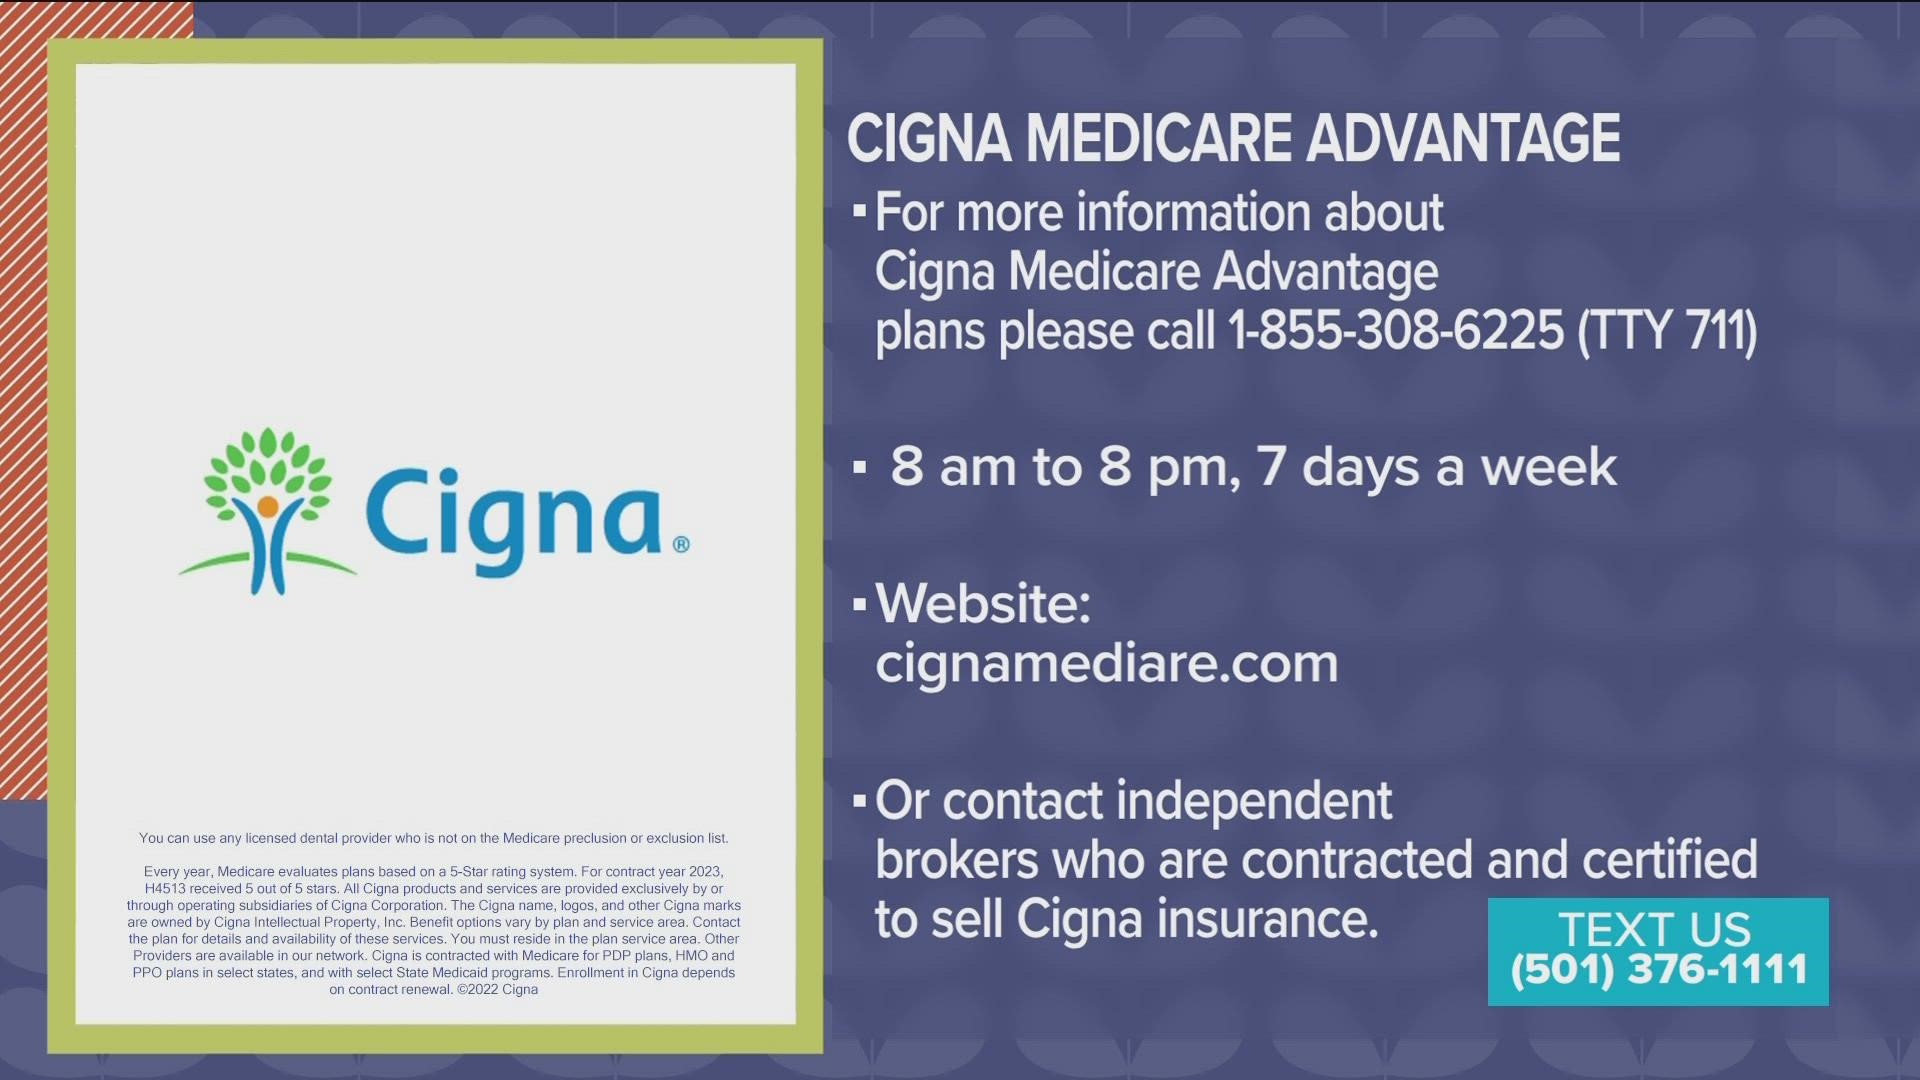 Cigna’s Medicare Advantage plans for 2023